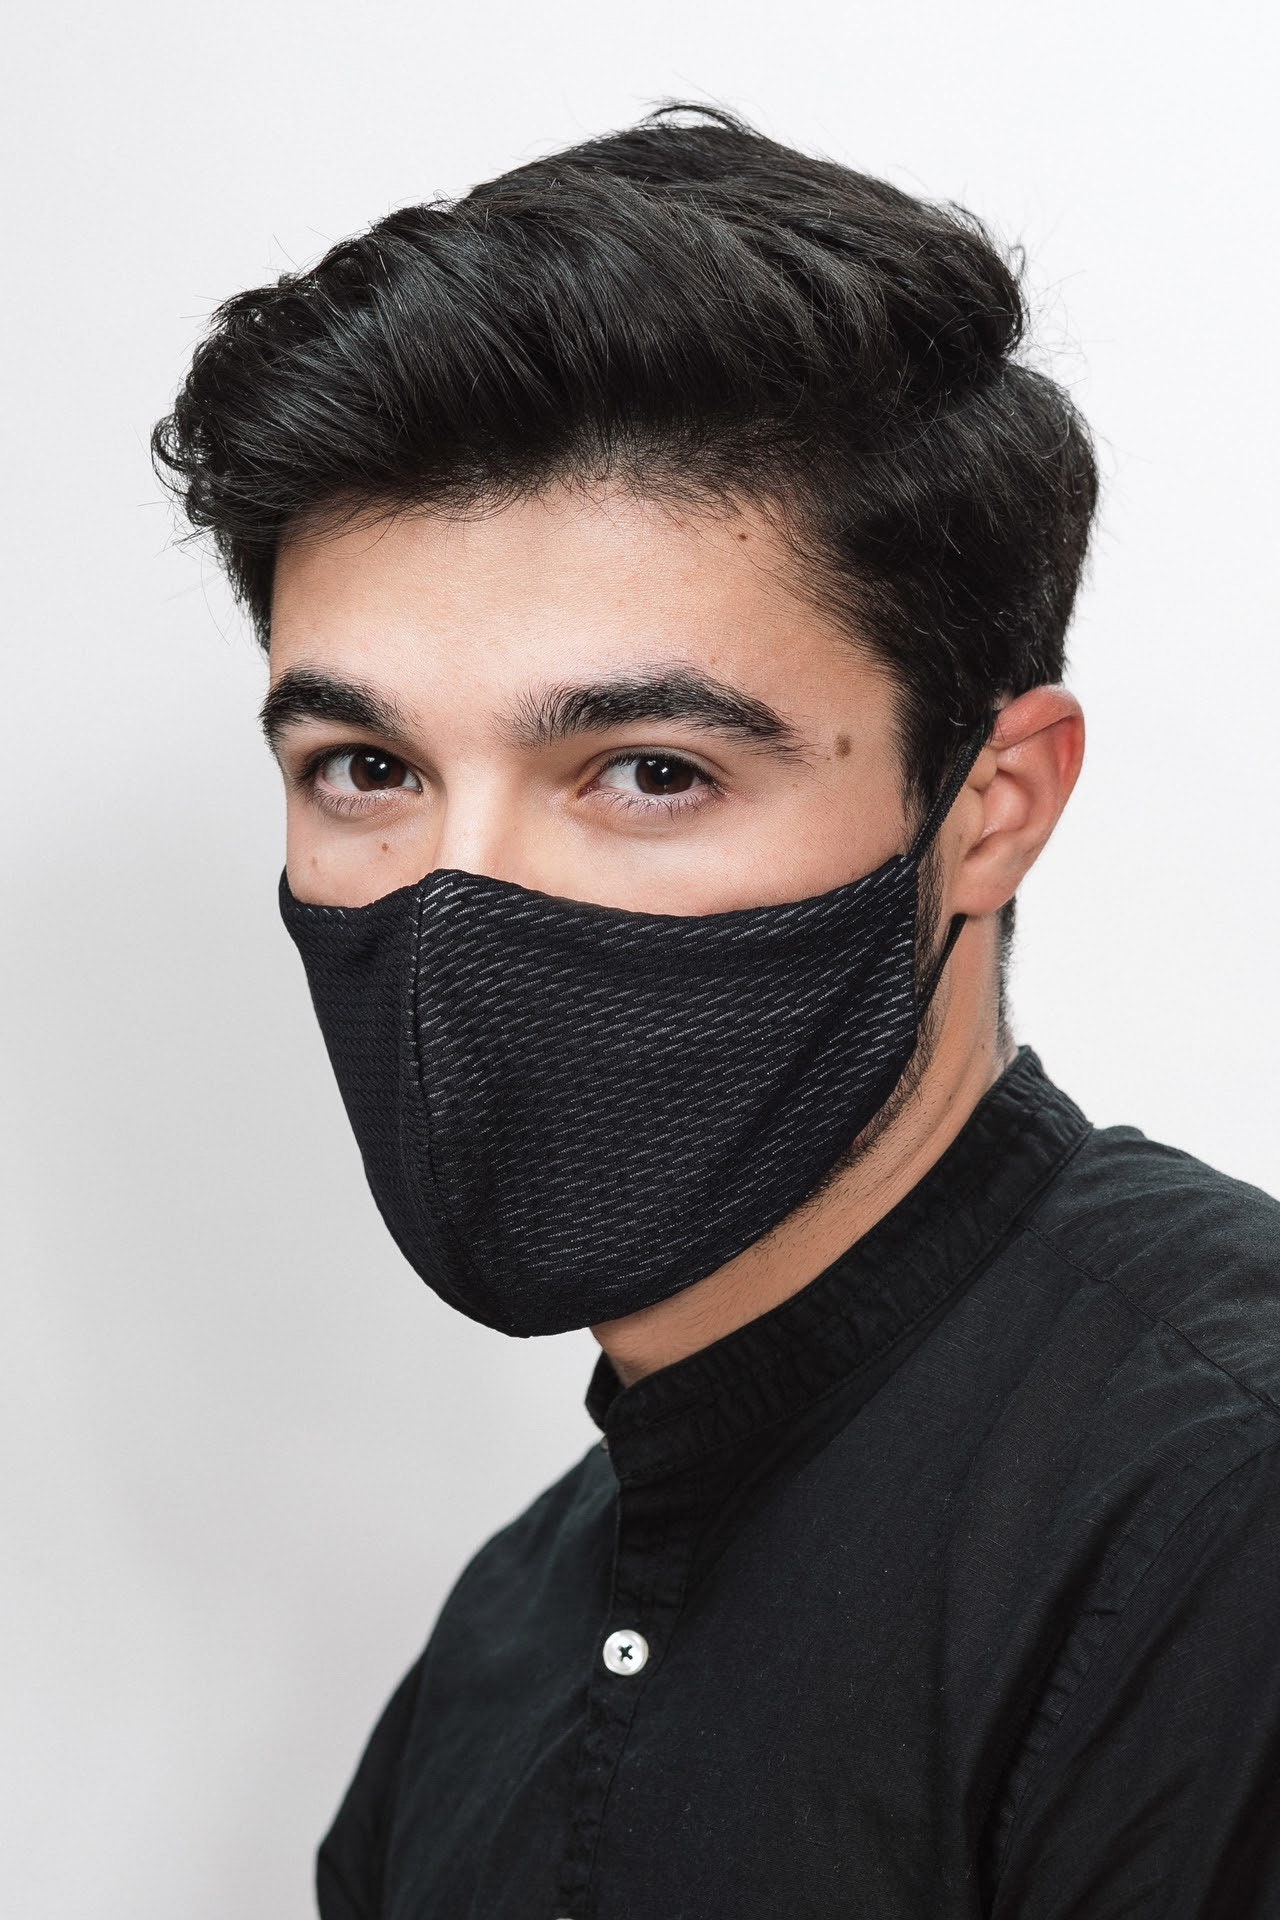 Face Mask Uk Men With Filter Pocket & Nose Wire Face Covering | Etsy UK